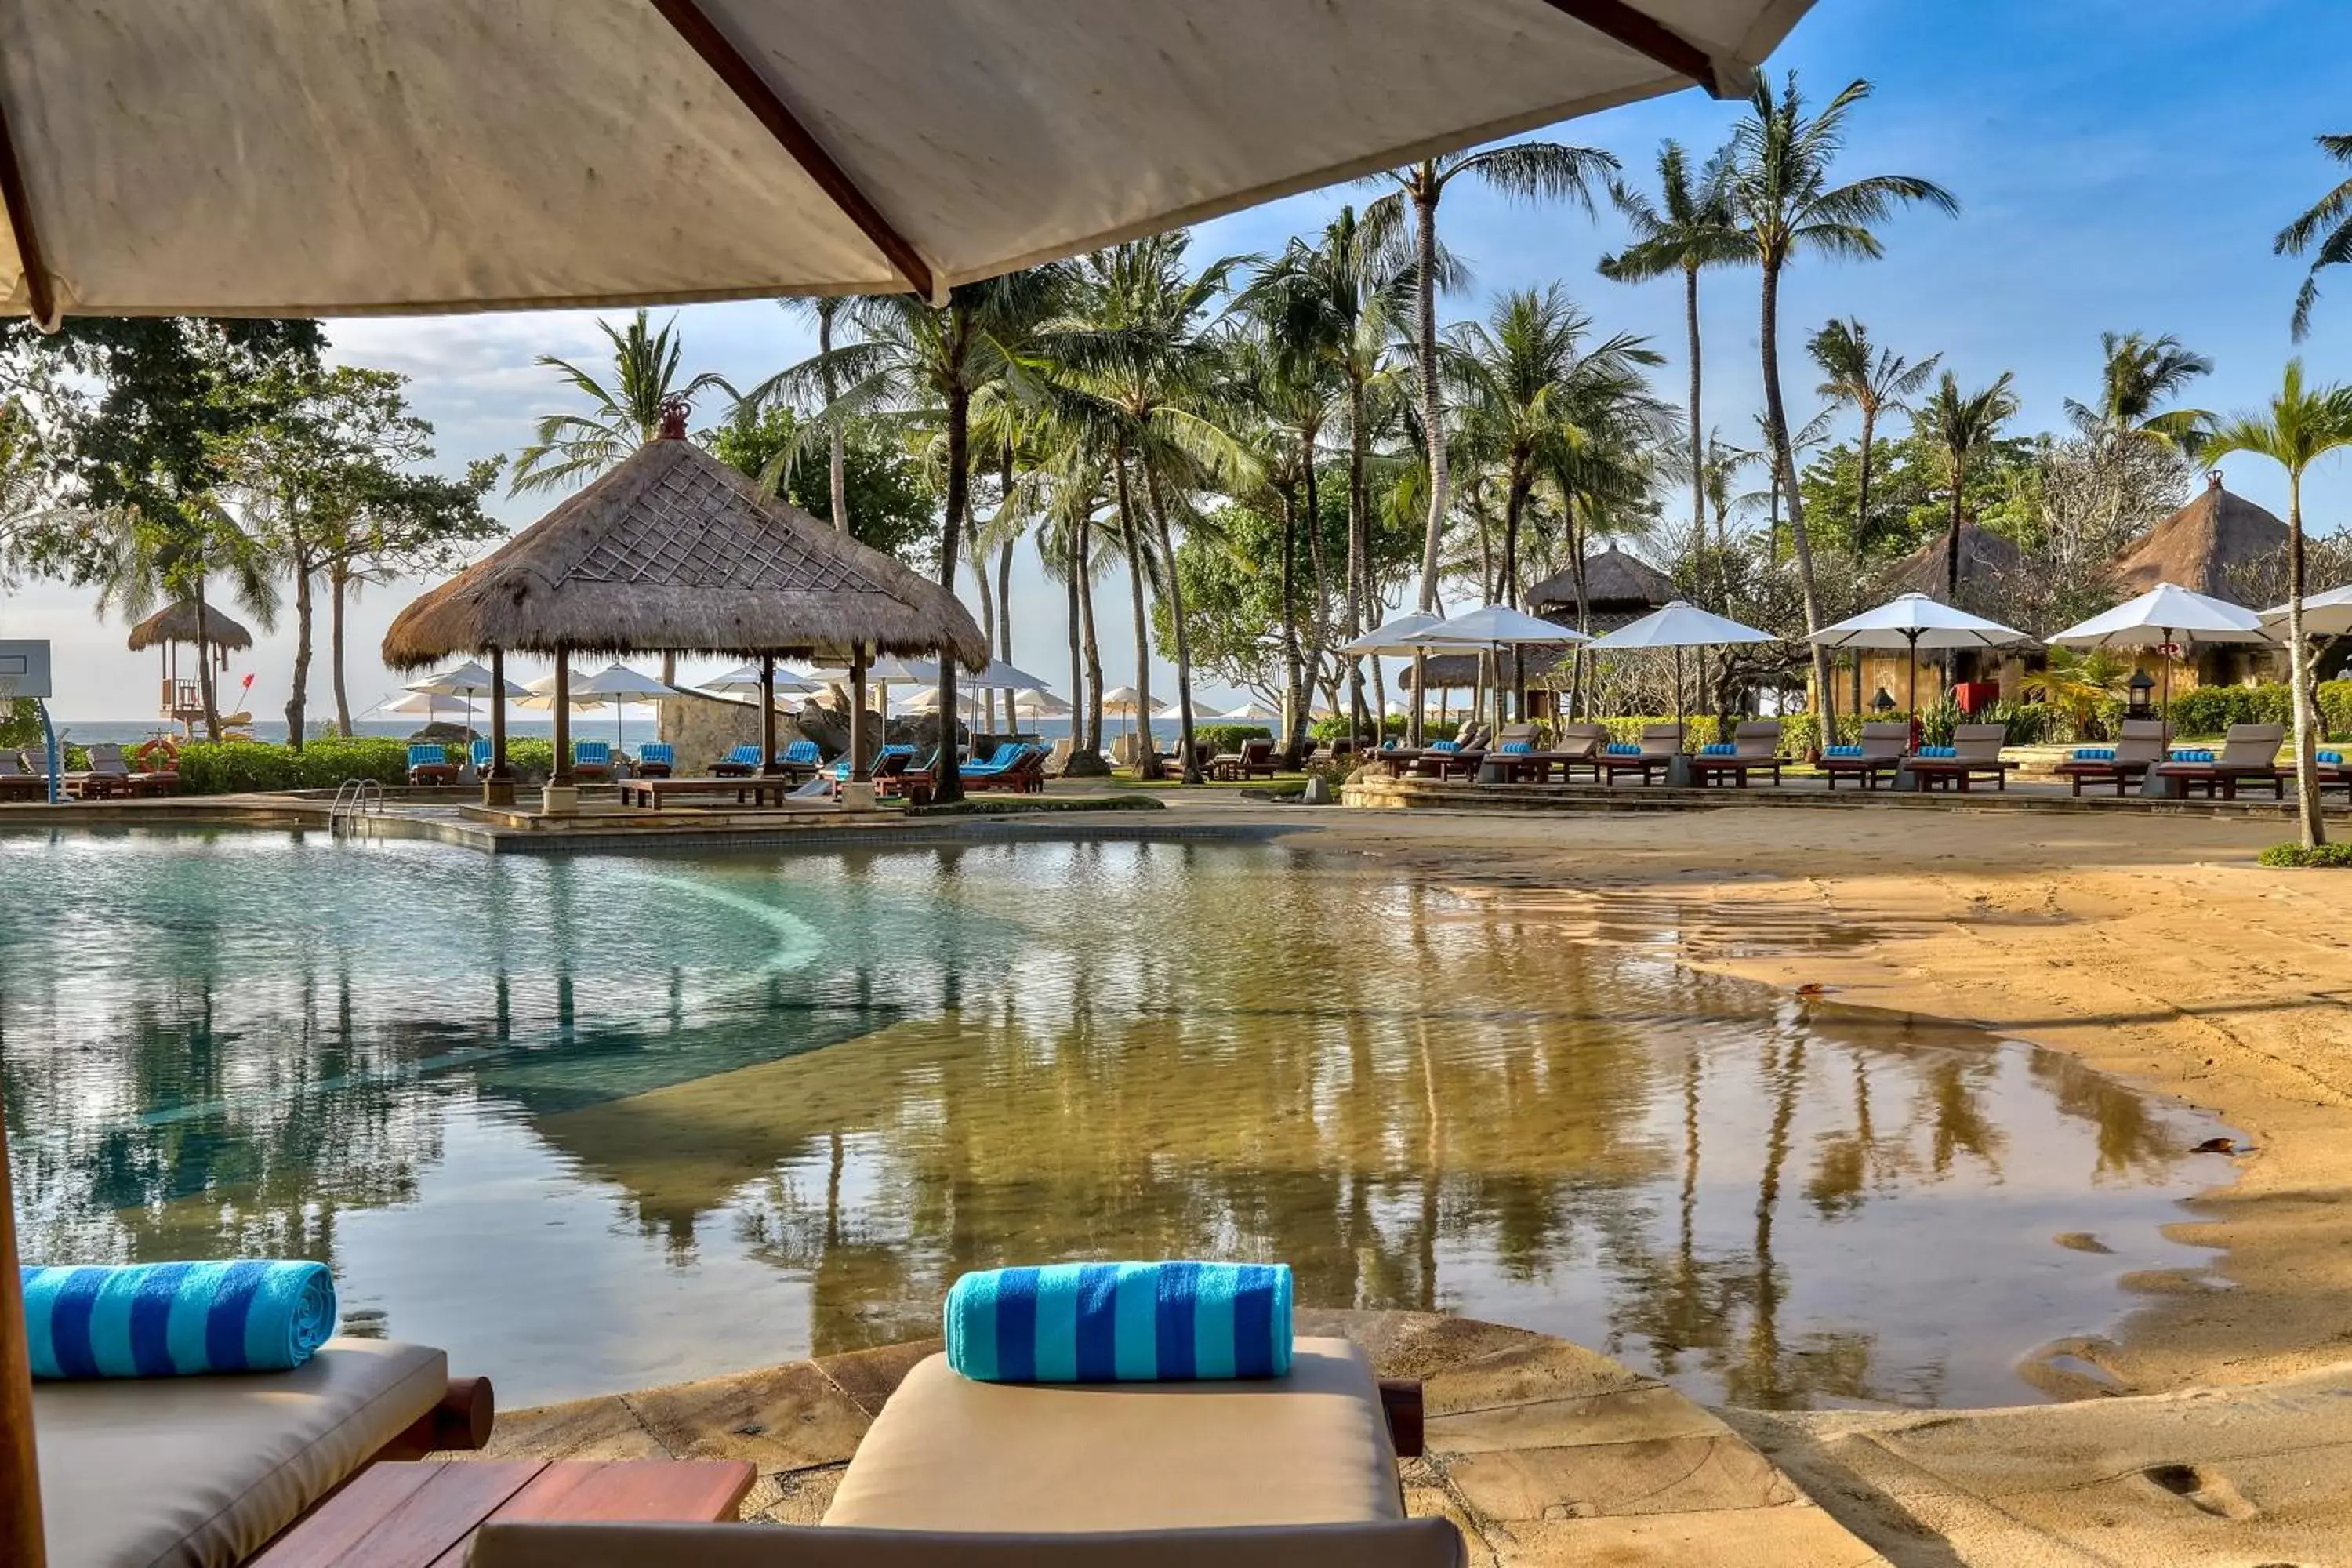 Swimming pool in Hilton Bali Resort